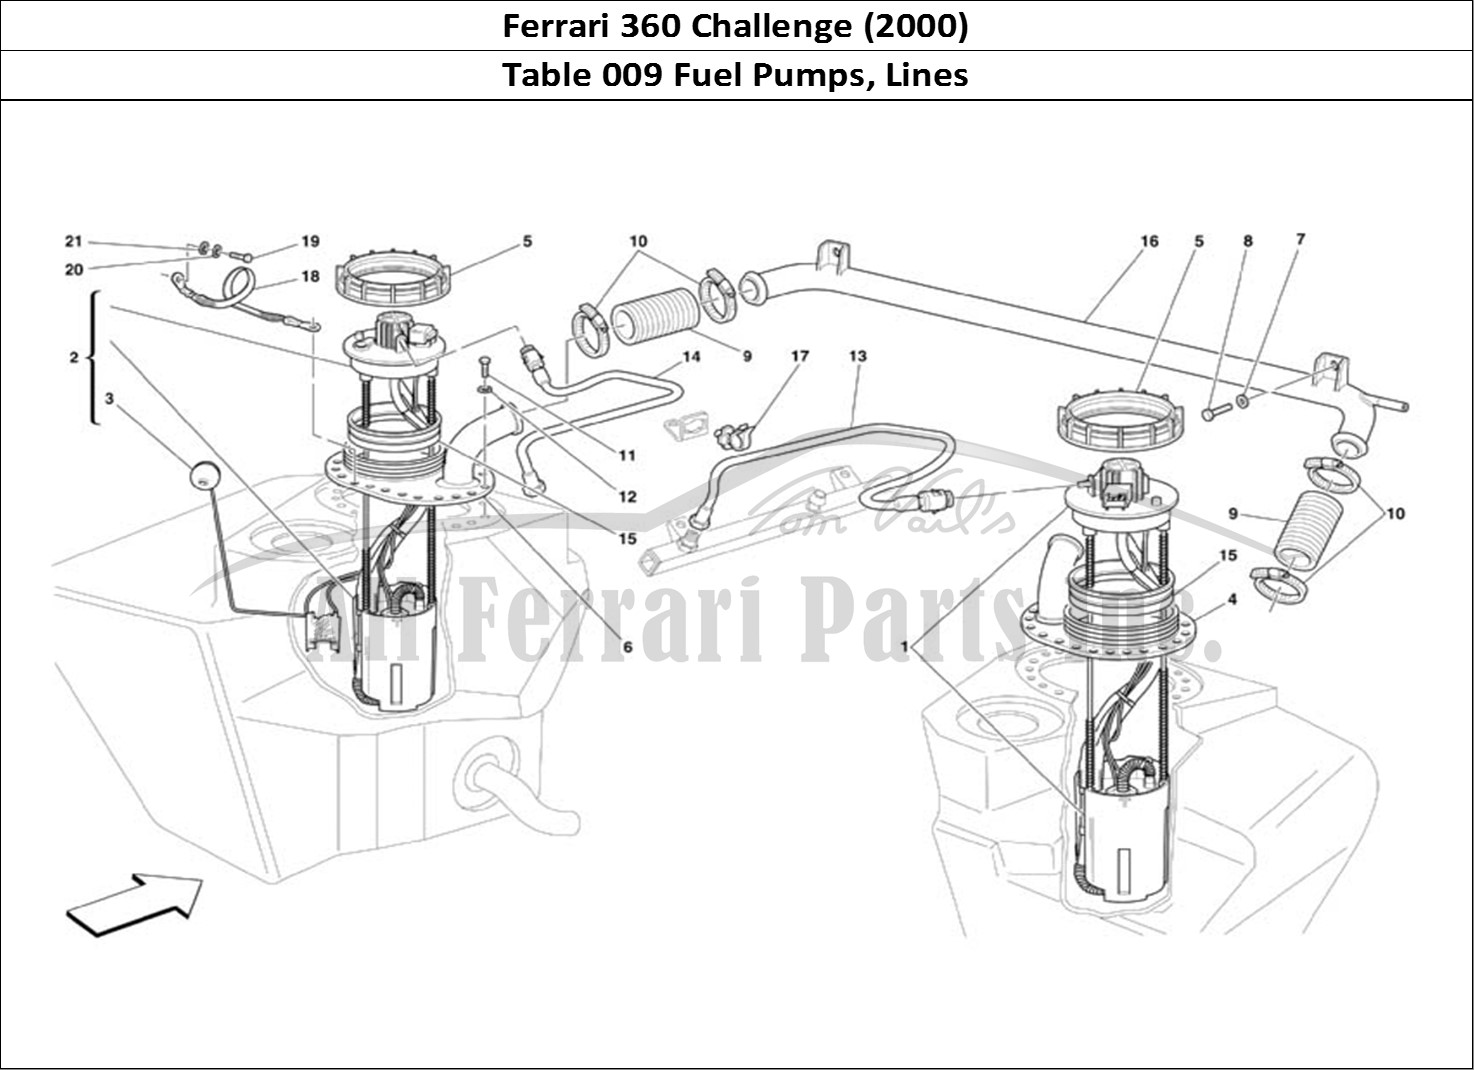 Ferrari Parts Ferrari 360 Challenge (2000) Page 009 Fuel Pumps and Pipes